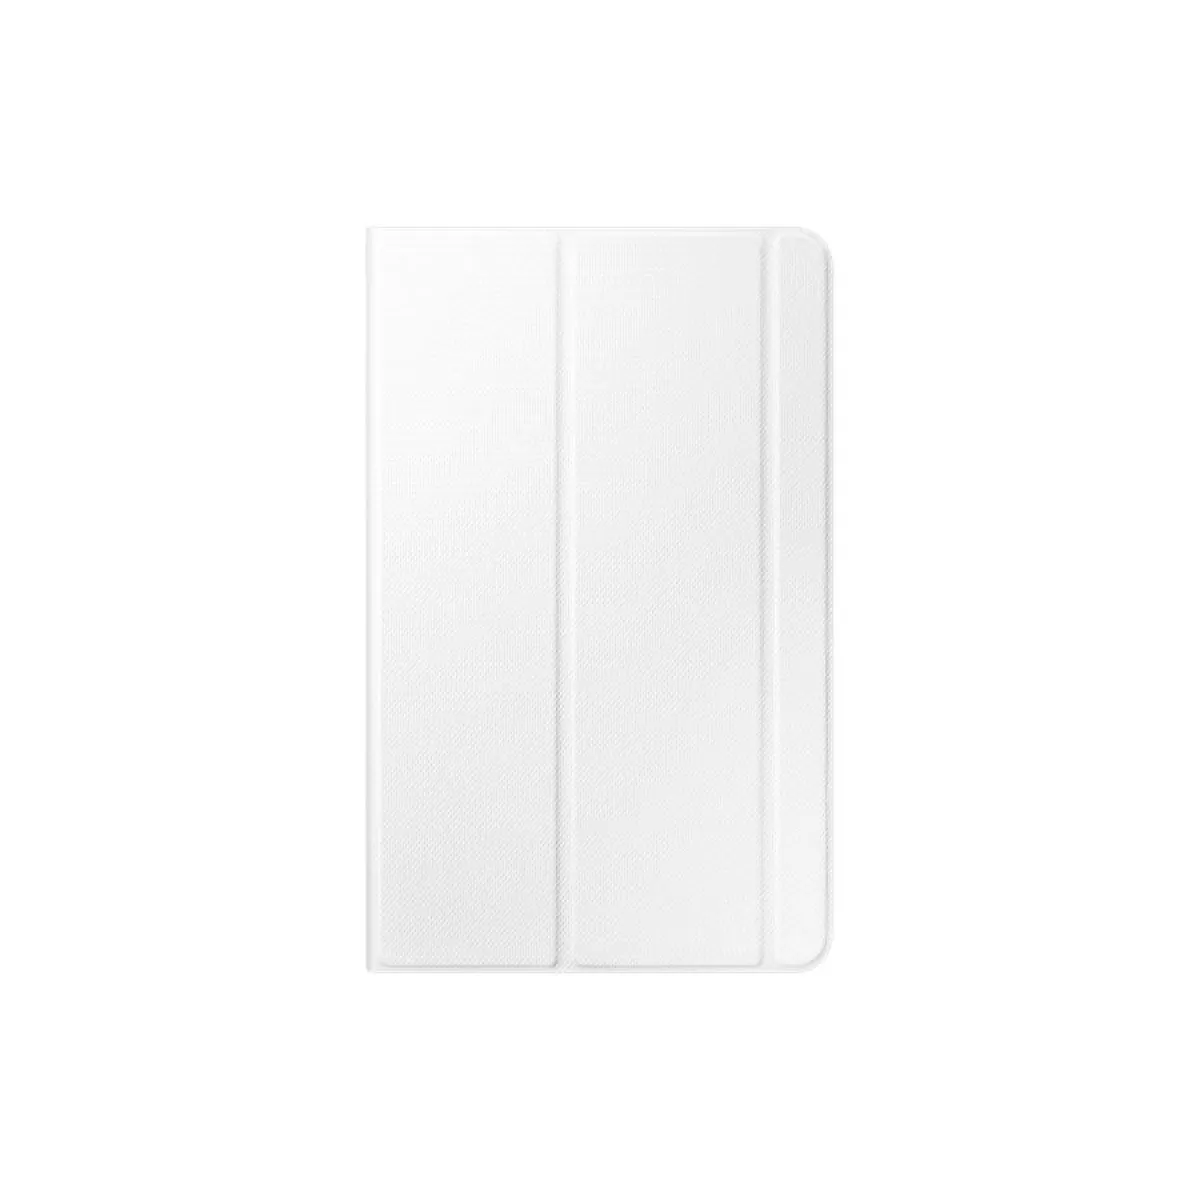 Samsung Galaxy Tab Е 9.6 Book Cover, White